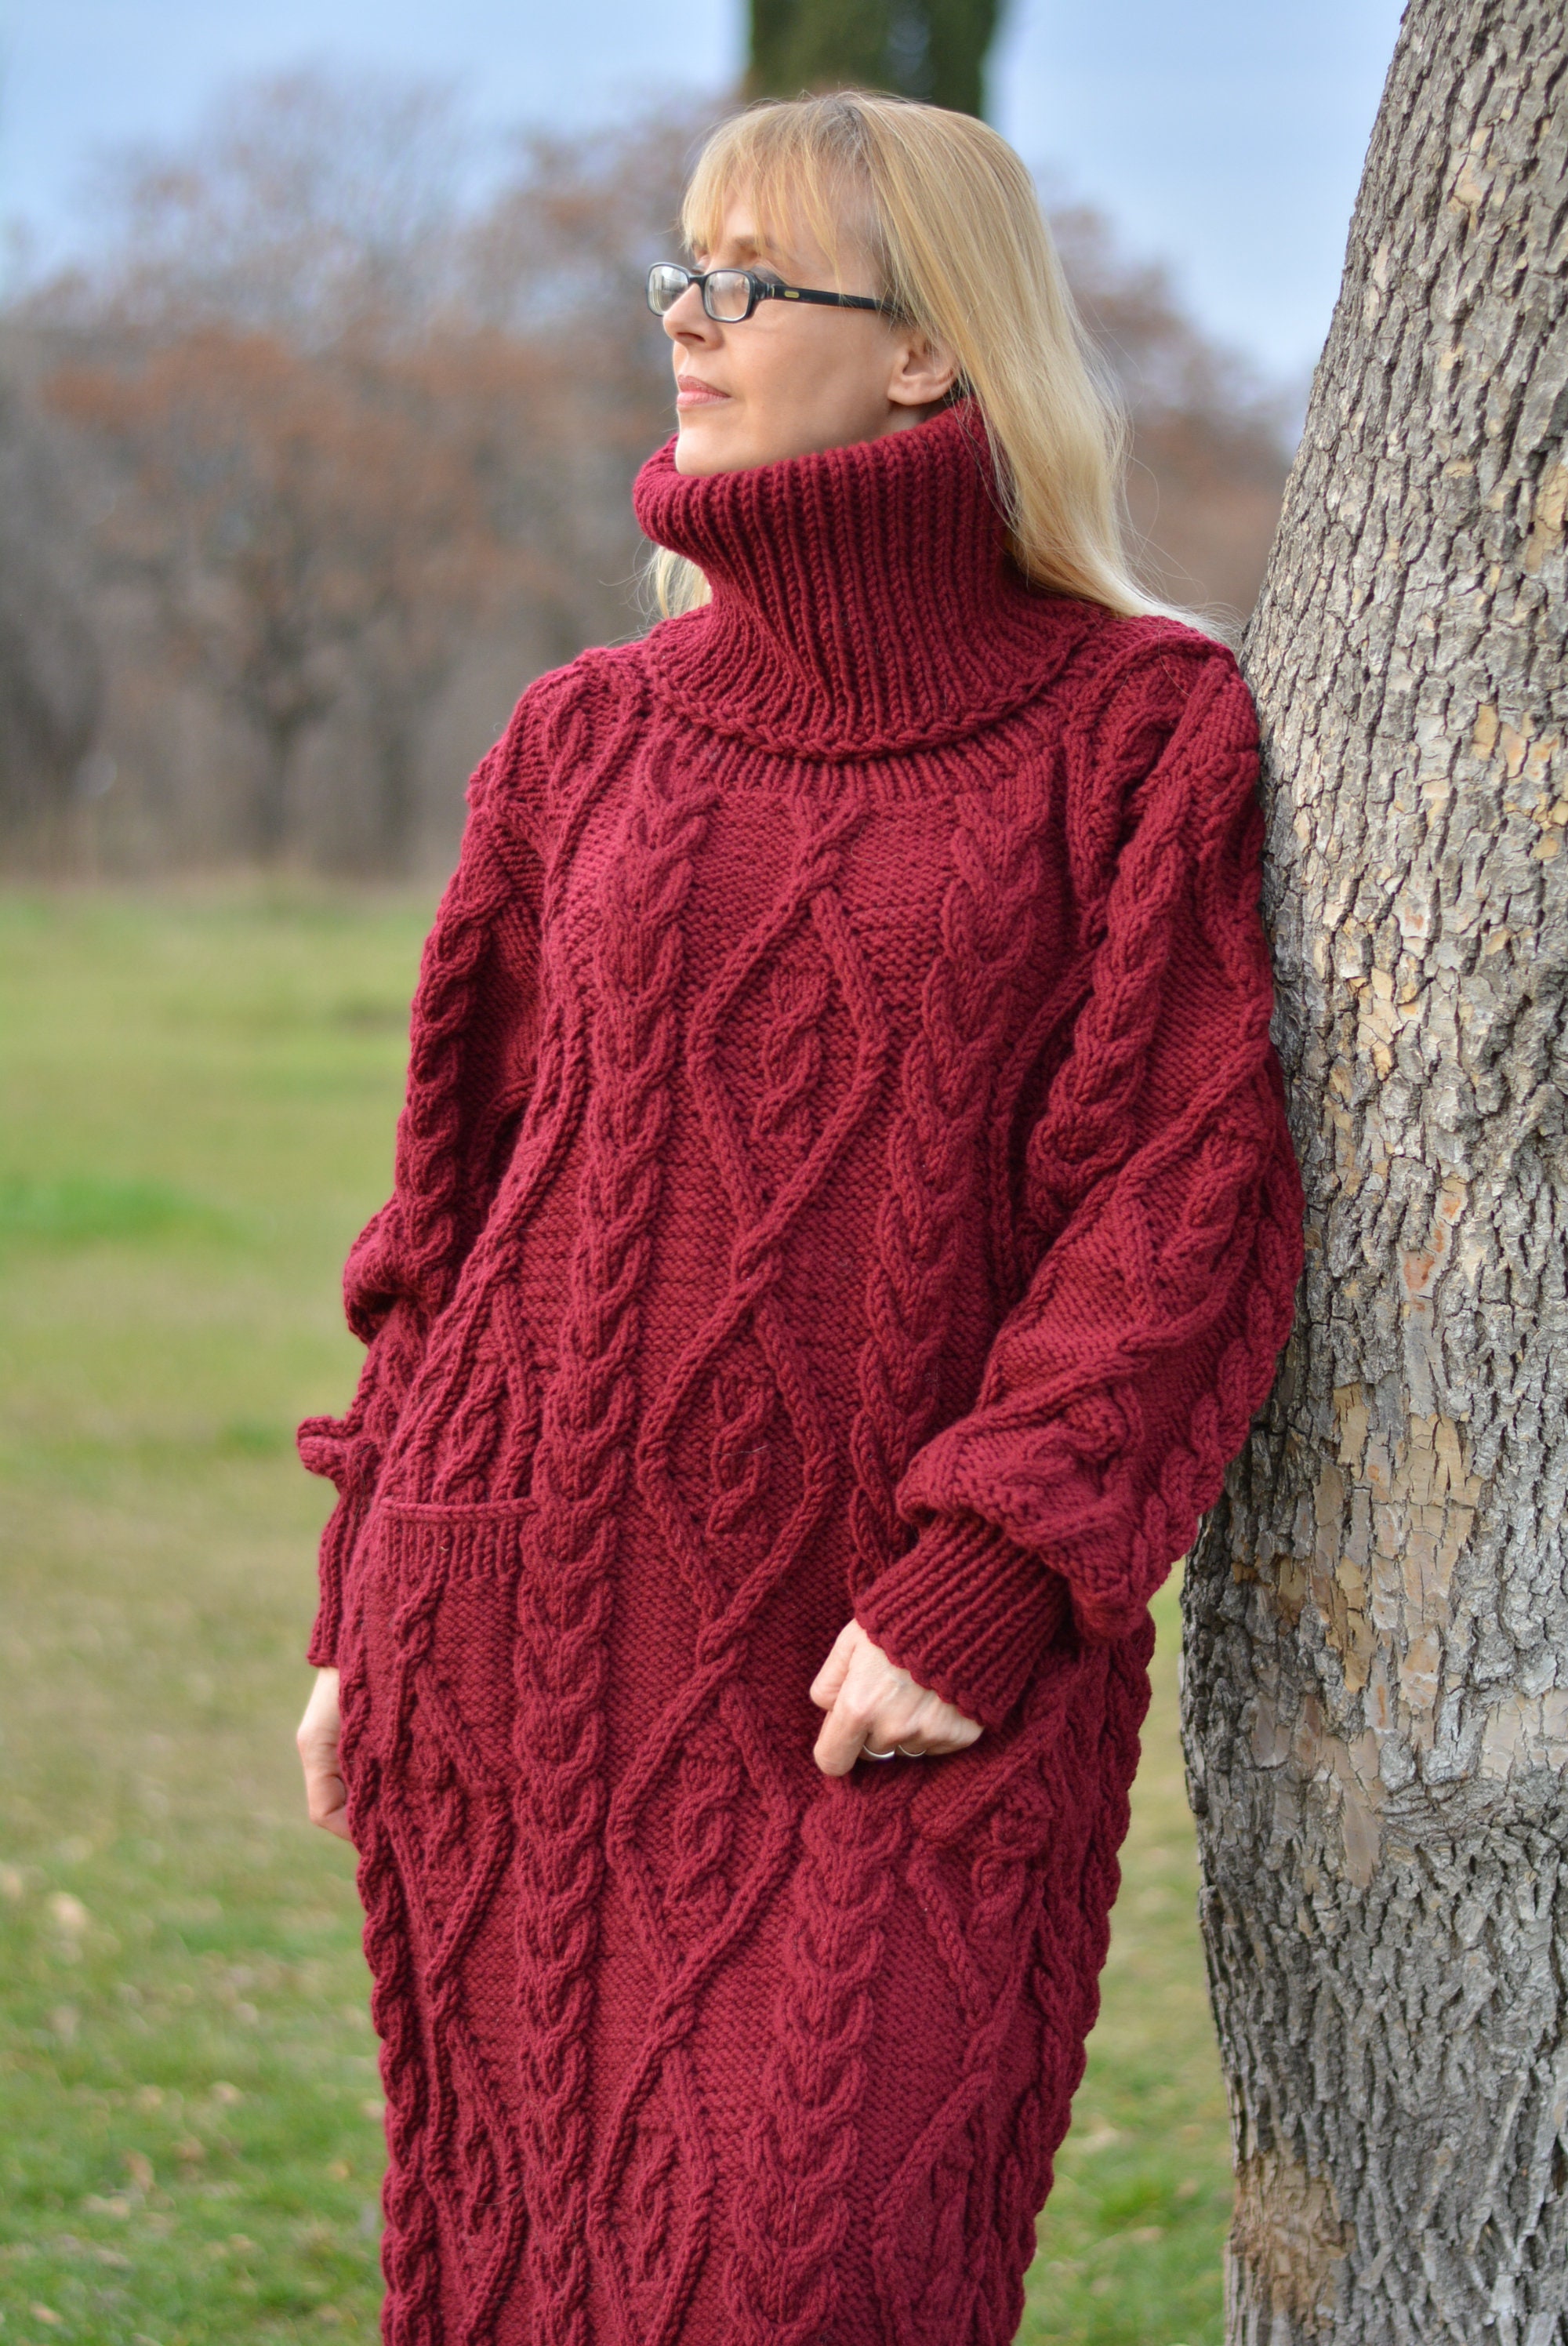 Kleding Dameskleding Sweaters Pullovers pure wol maxi trui kabel gebreide trui handgemaakte trui duurzame knitwear wollen jurk kabel gebreide jurk boho trui maxi trui 